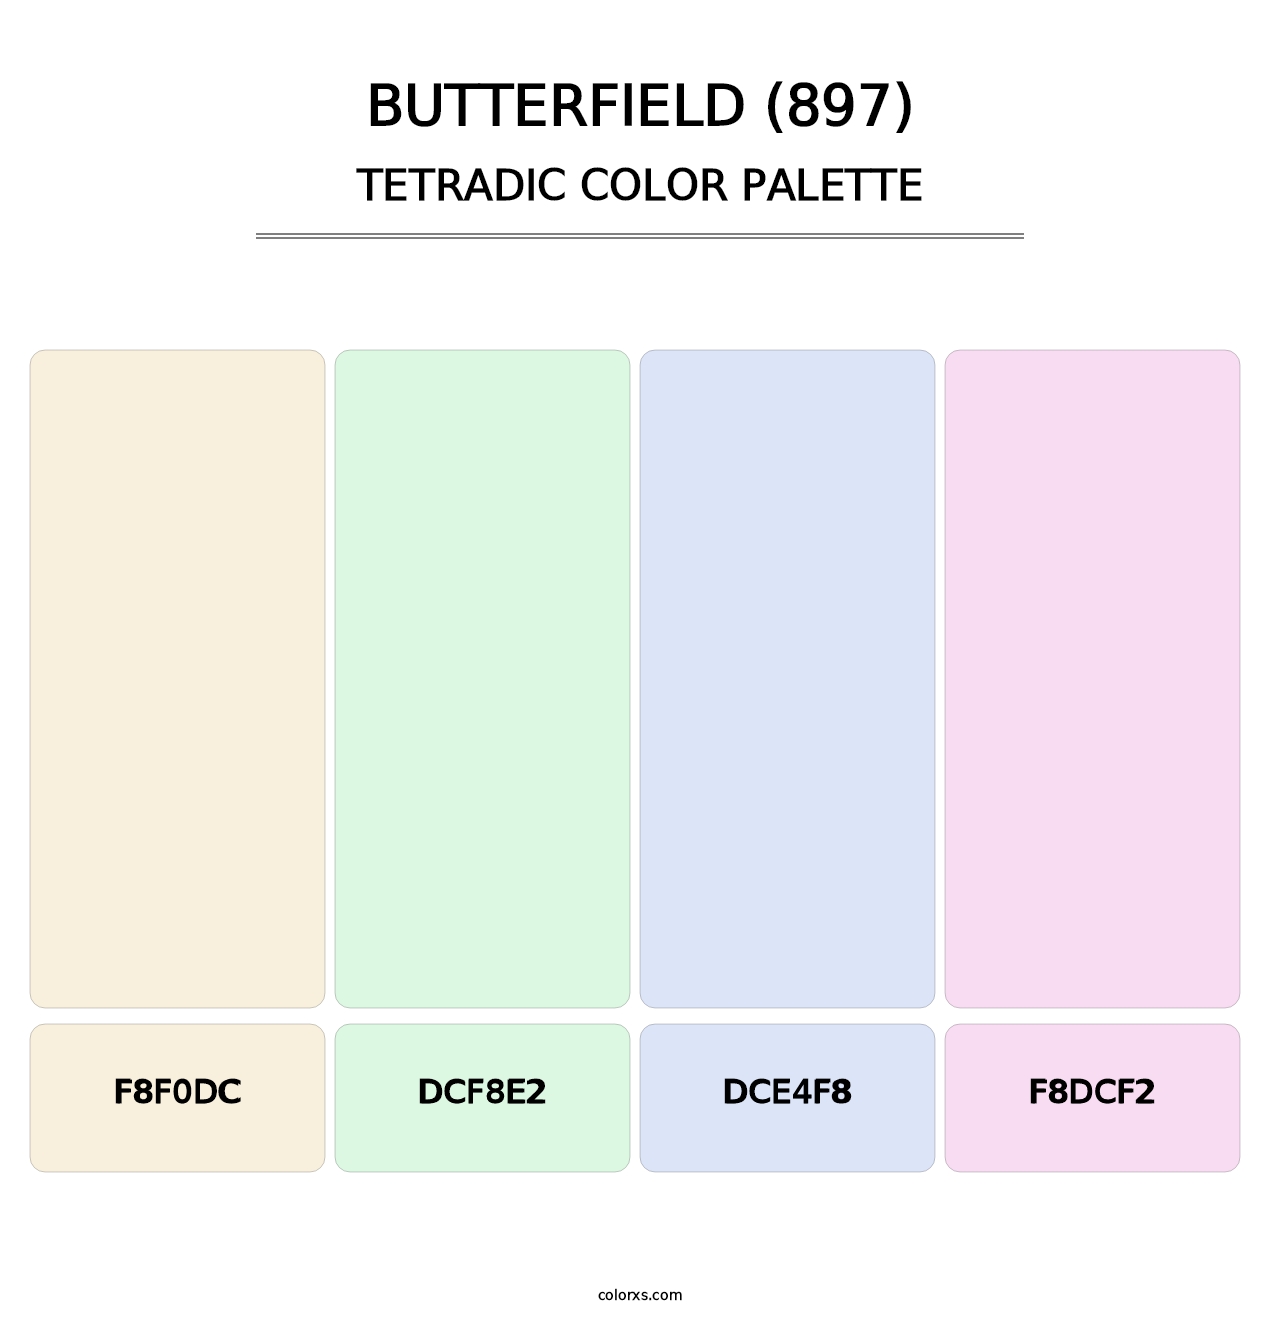 Butterfield (897) - Tetradic Color Palette